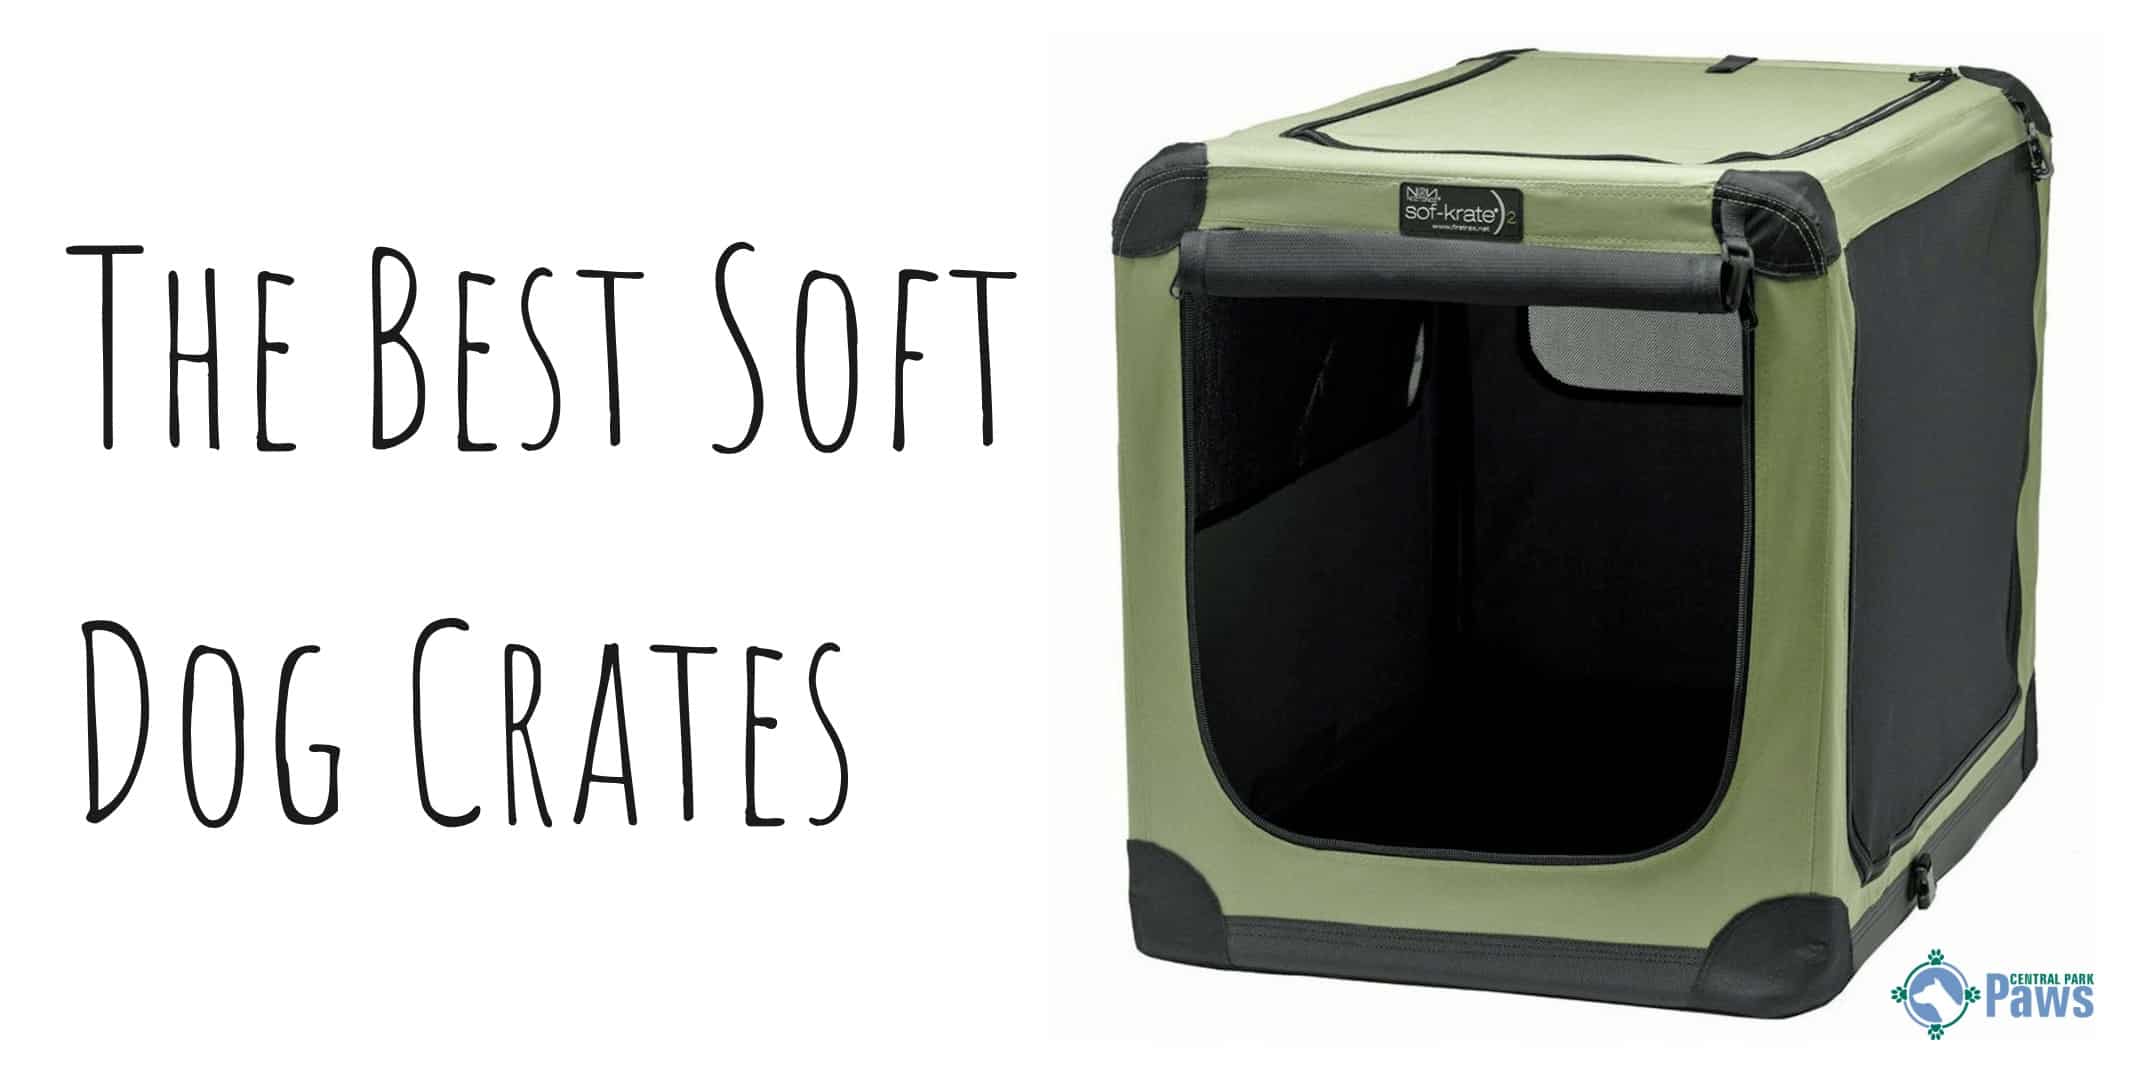 Best Soft Dog Crates